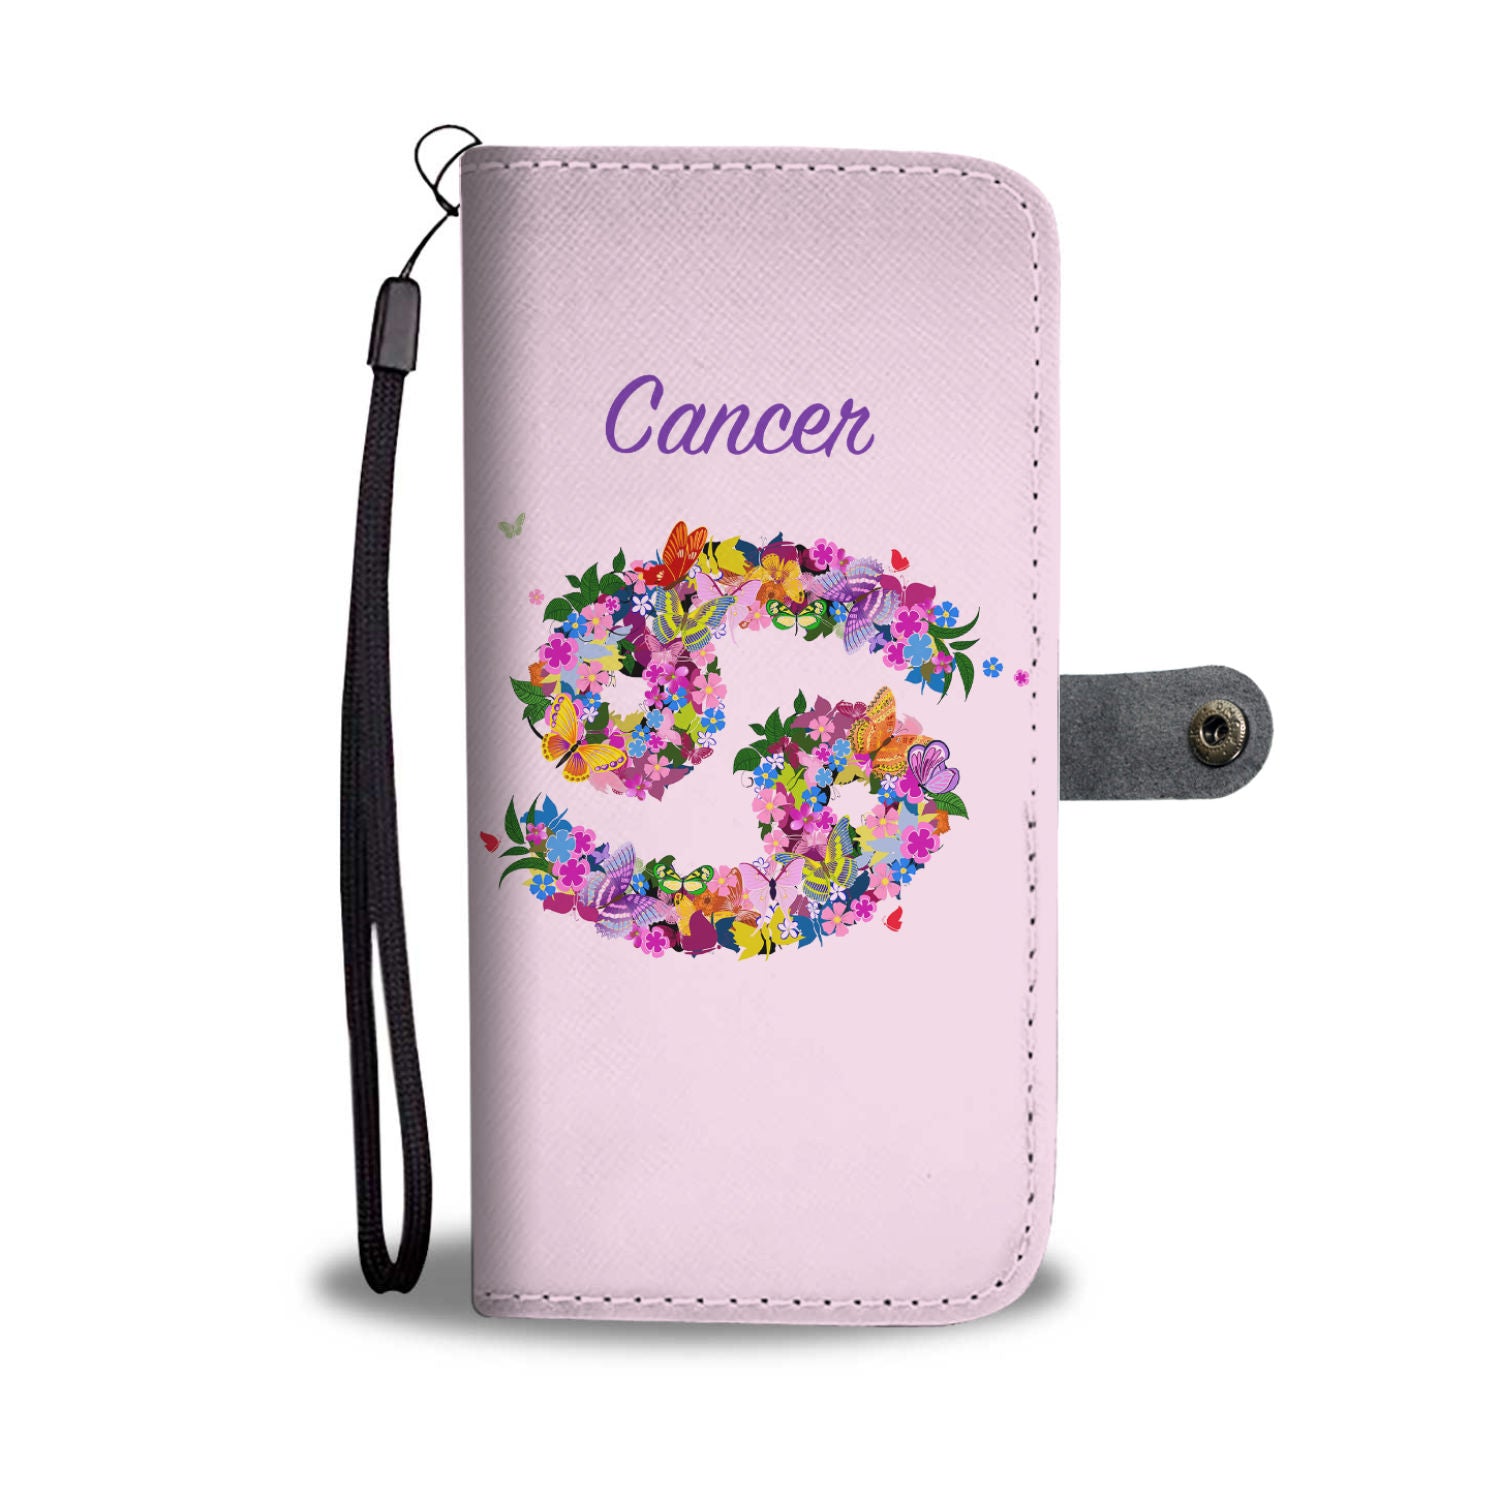 Cancer Floral Phone Wallet